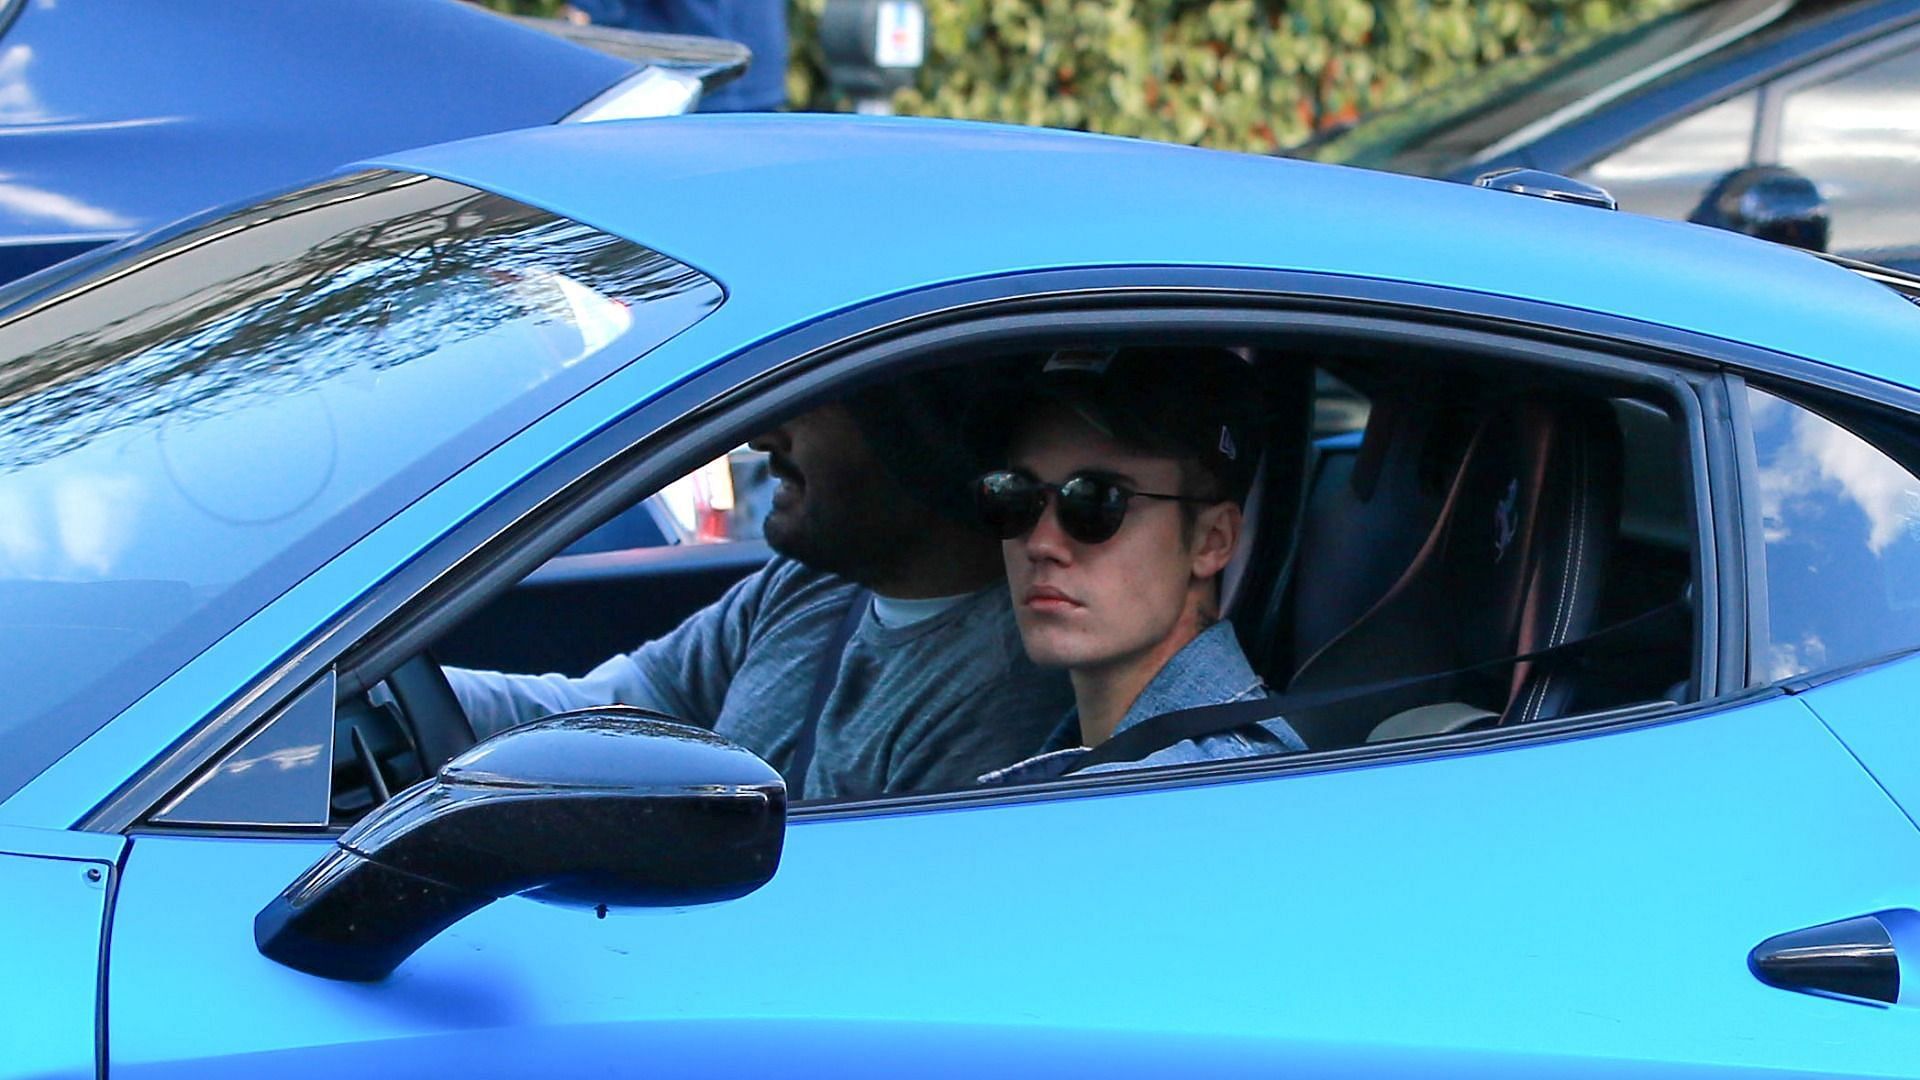 Ferrari blacklists Justin Bieber from buying any new cars (Image via Splash News)